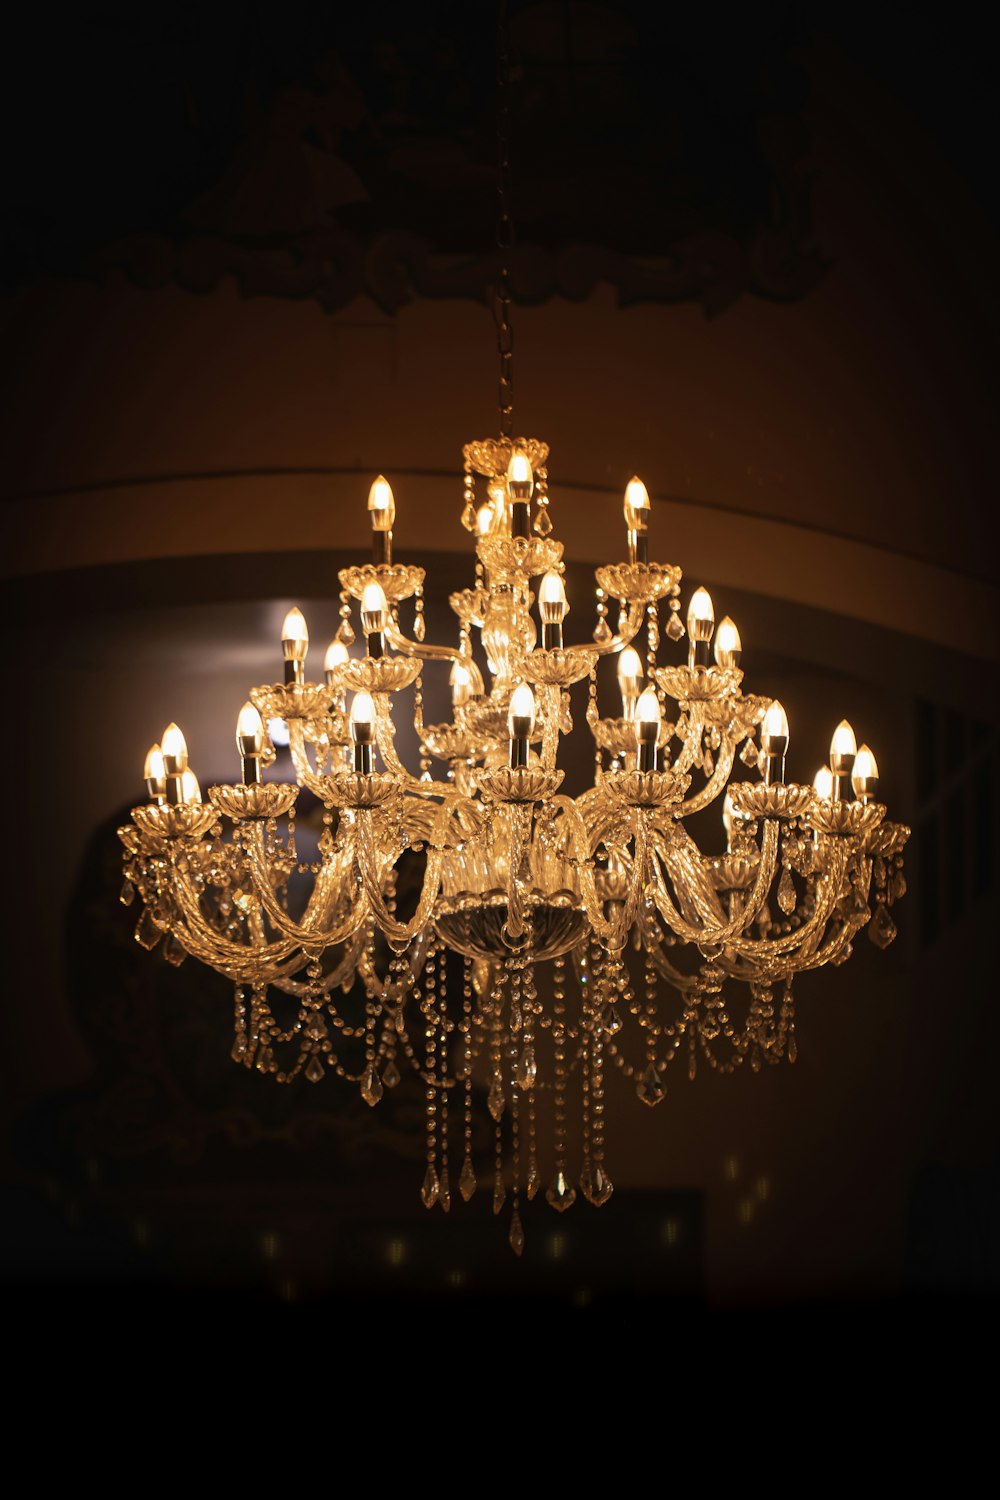 brass uplight chandelier turned on in room